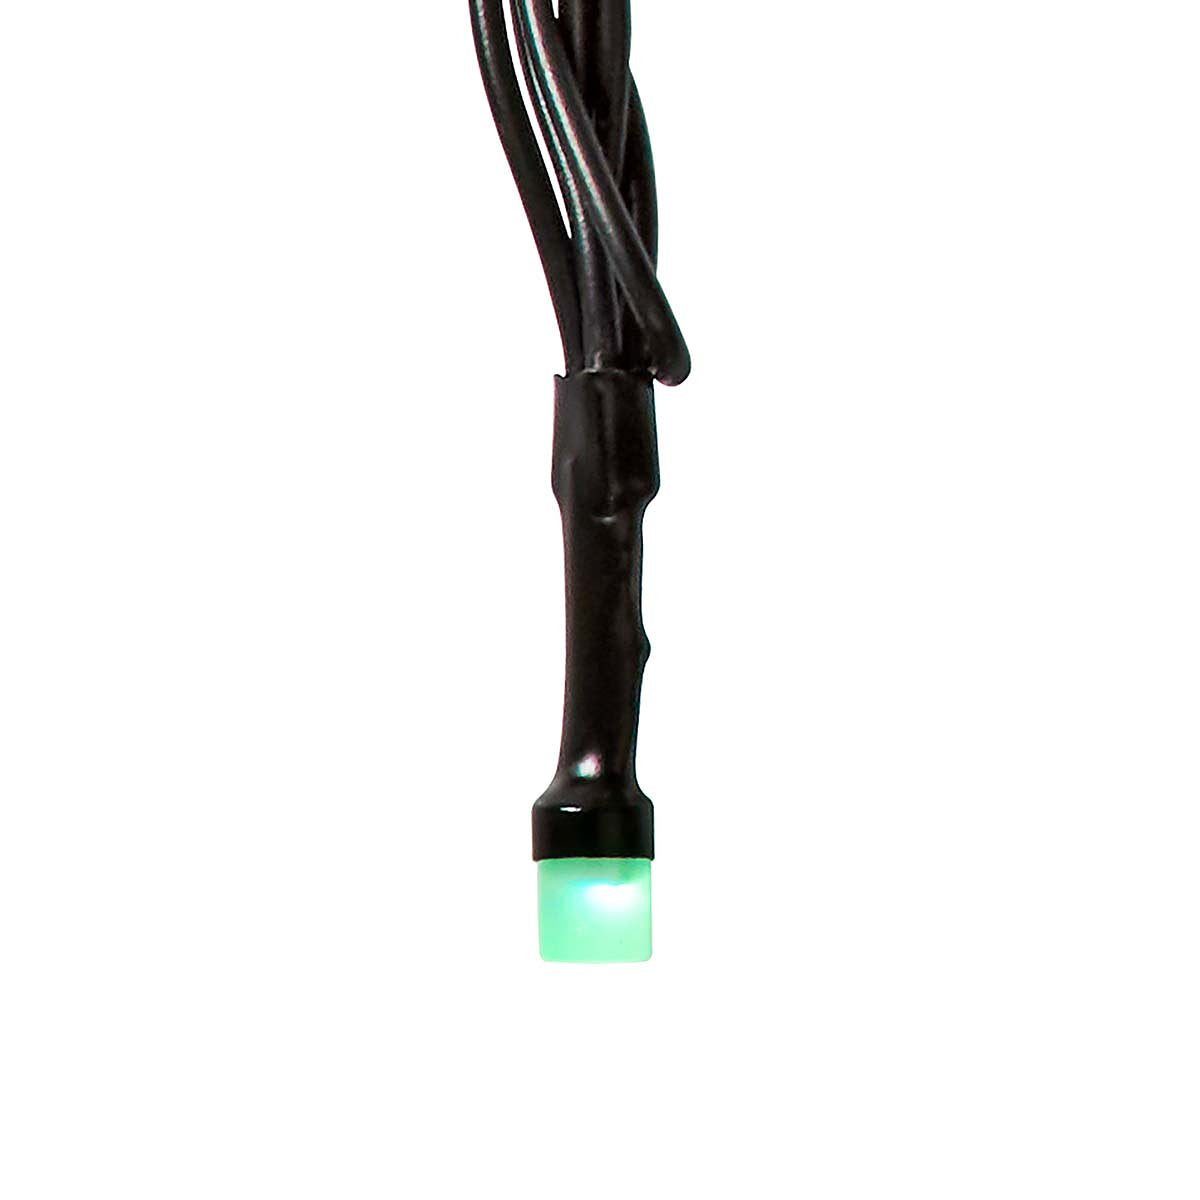 Nedis SmartLife Decoratieve LED | Wi-Fi | RGB | 84 LED's | 10.0 m | Android / IOS